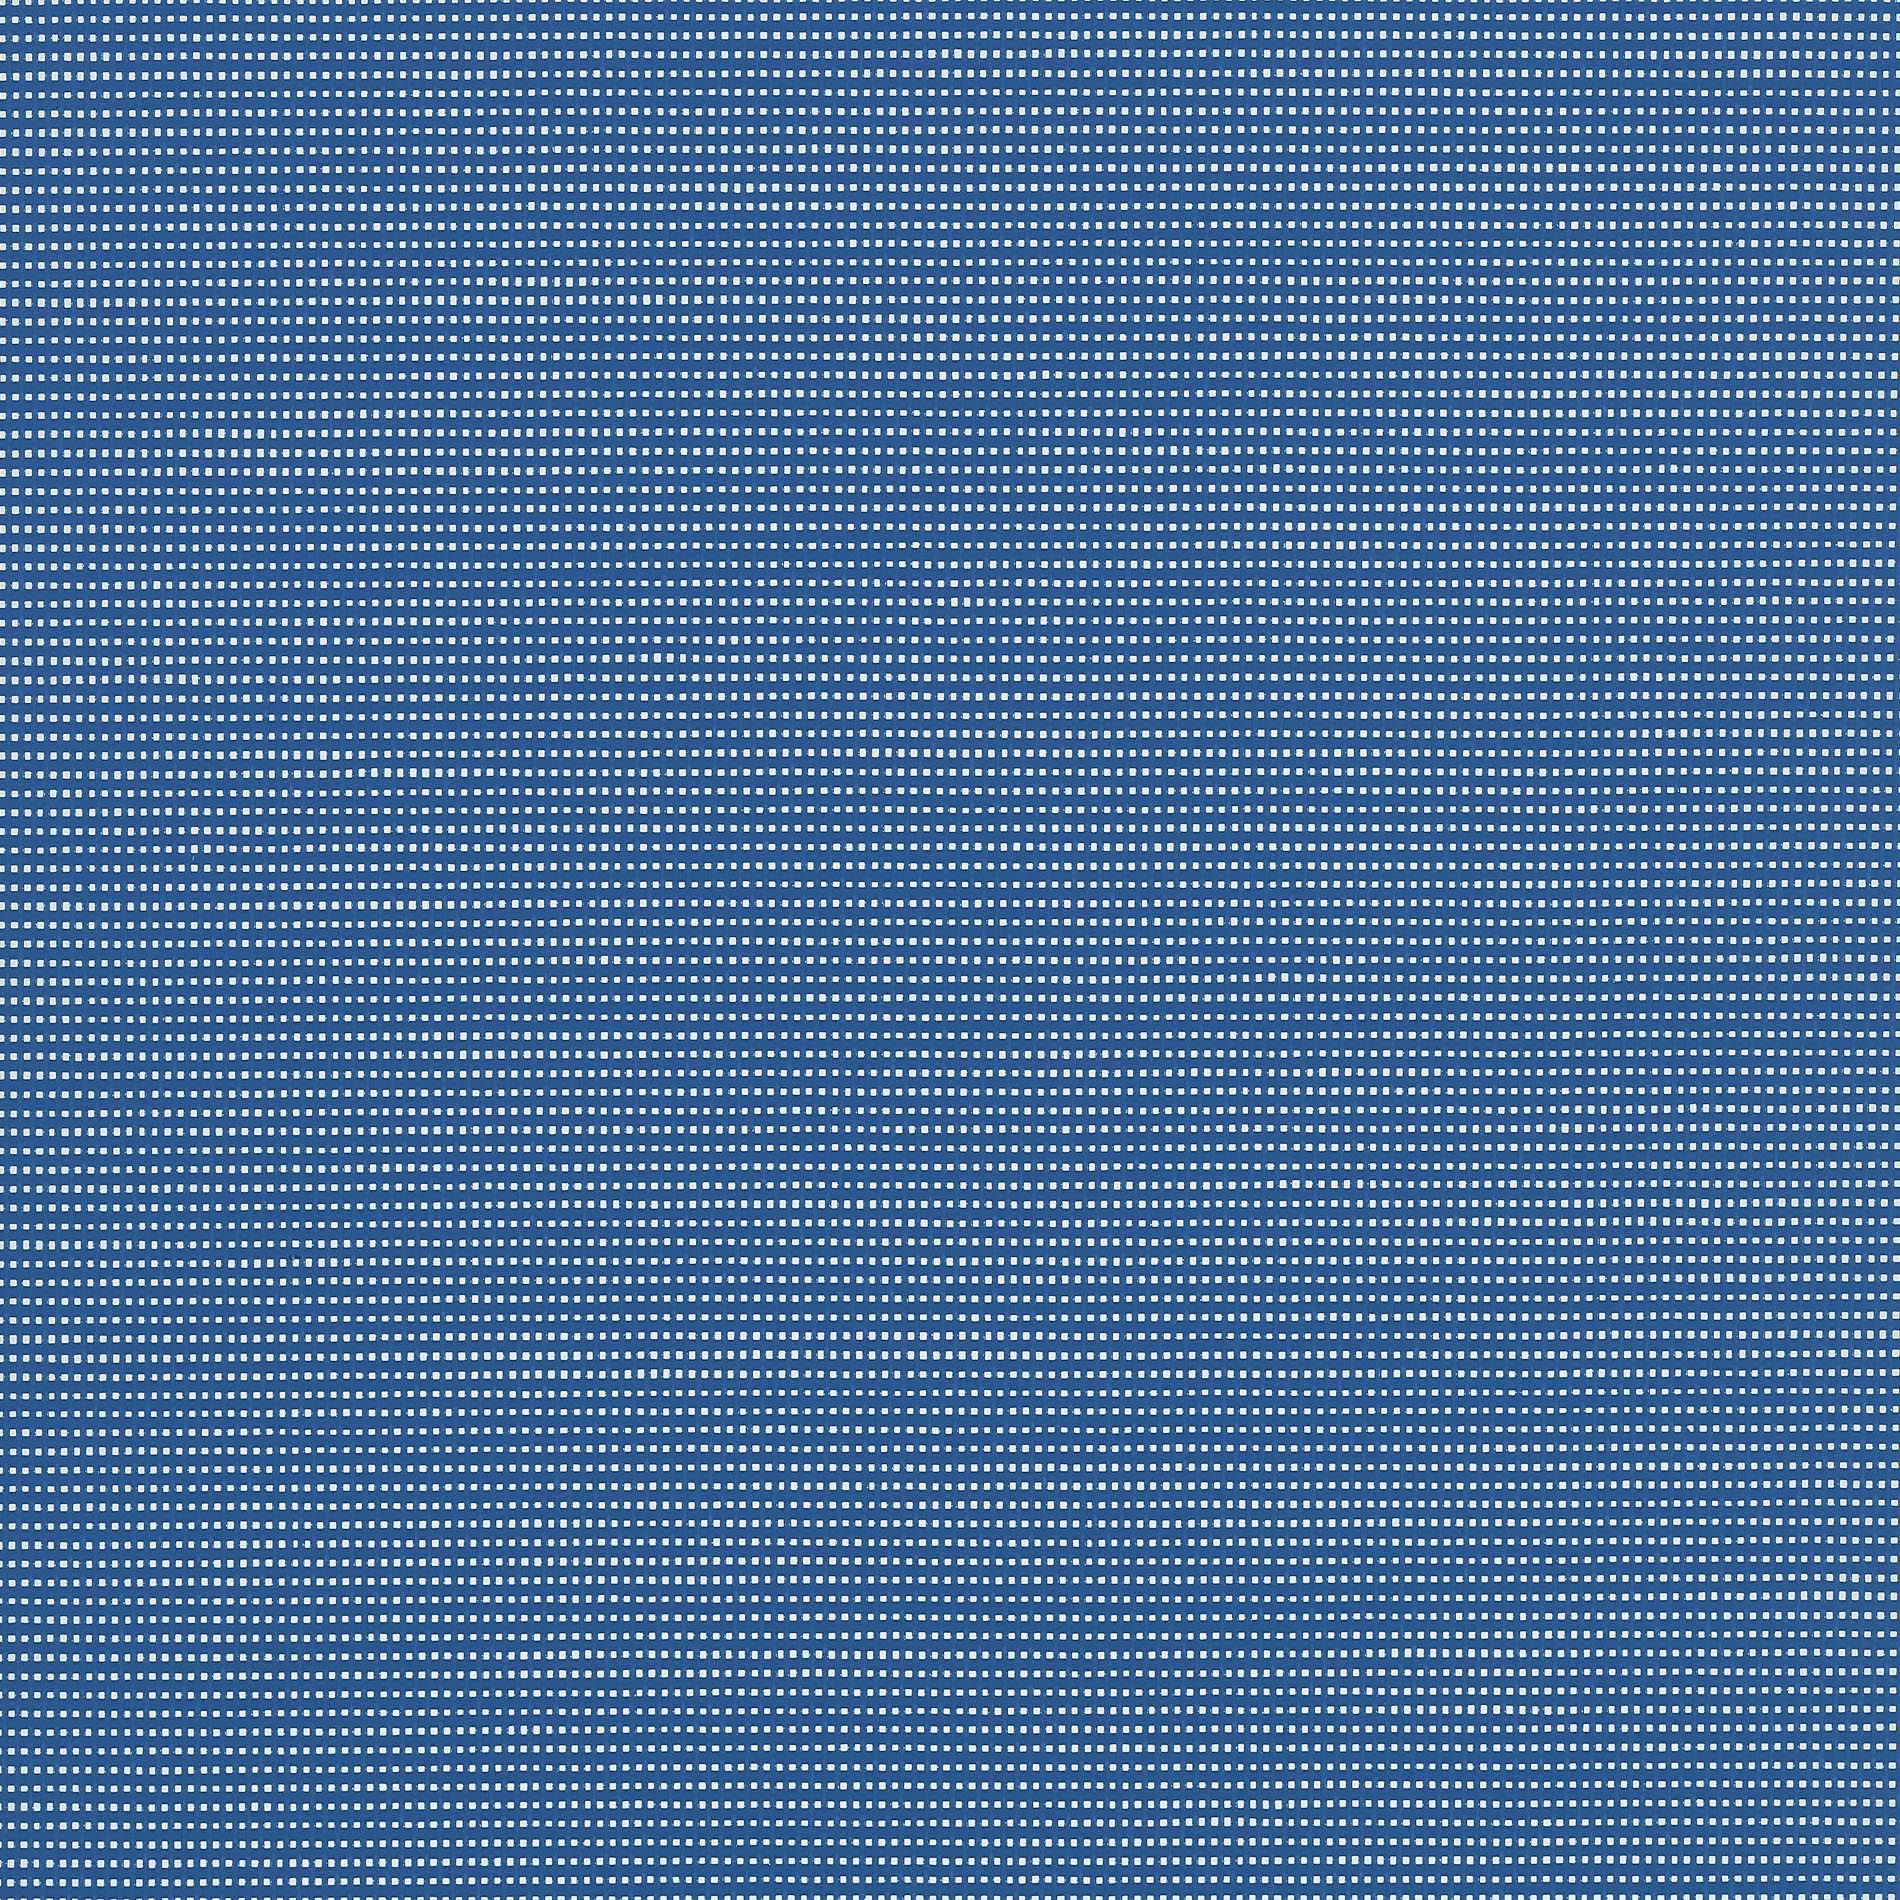 Altex - Fabric - SOLTIS HORIZON 86 - Deep blue - 86-51182